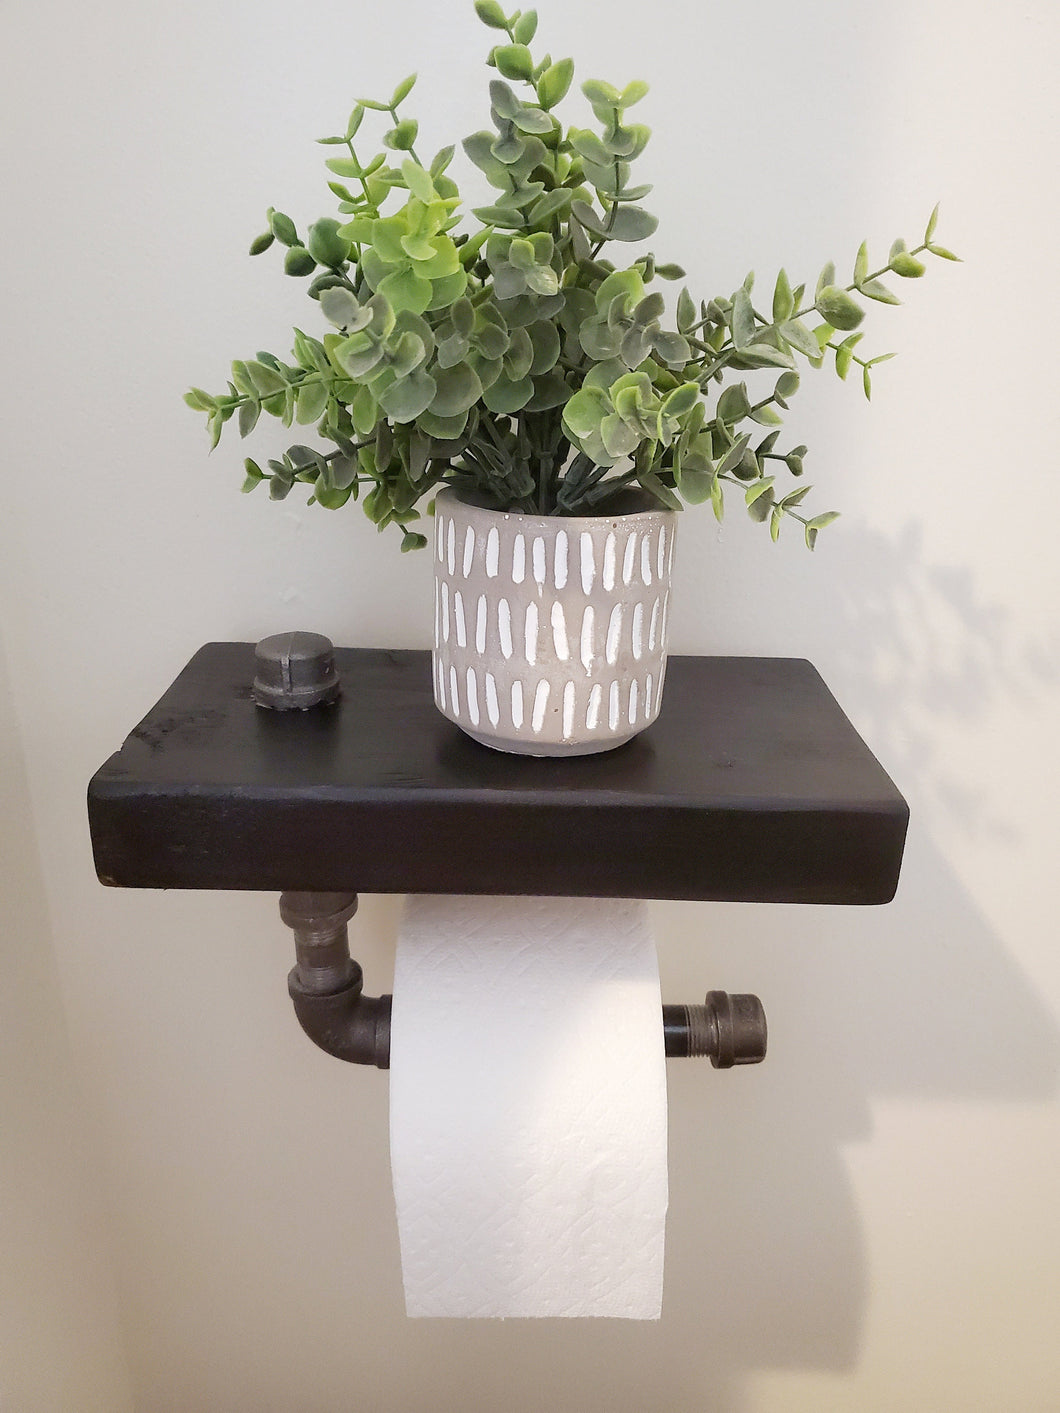 Industrial Toilet Paper Holder with Shelf - Steampunk Bathroom